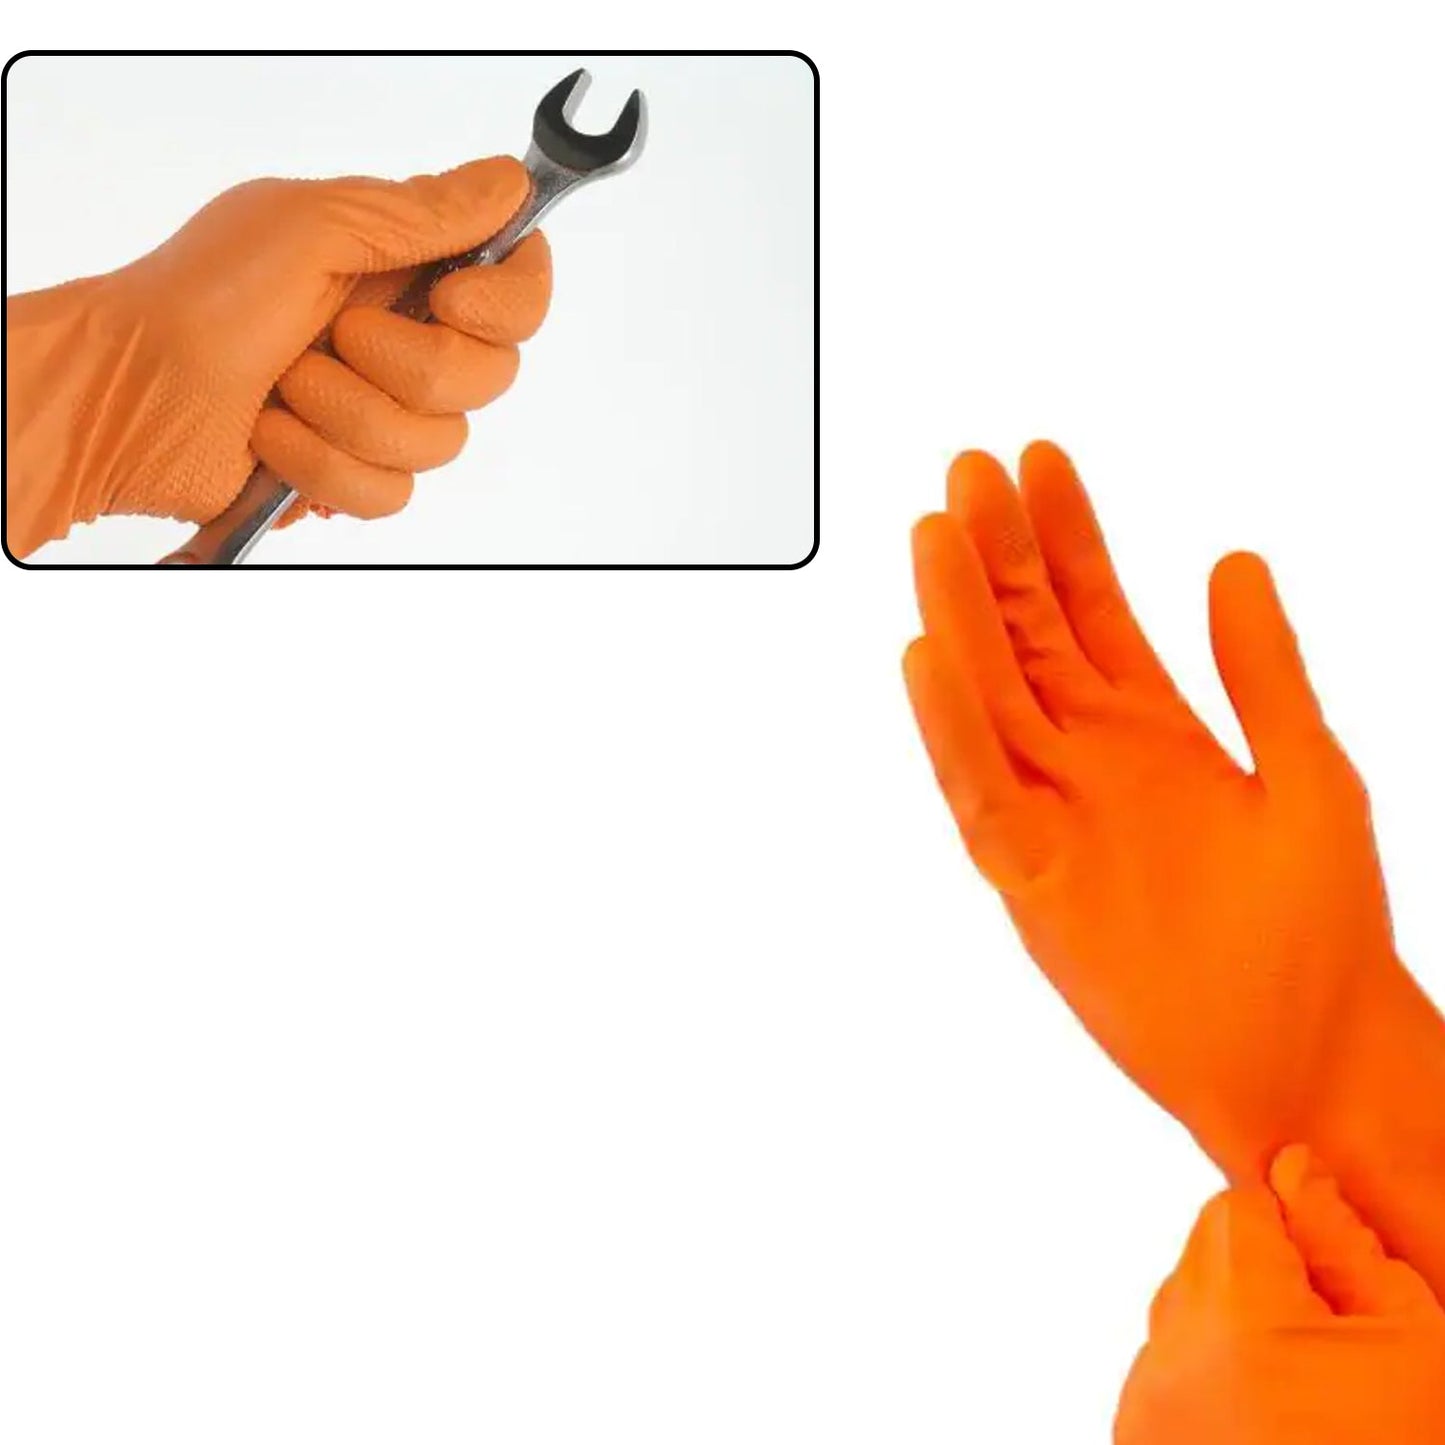 4852 2 Pair Medium Orange  Gloves For Types Of Purposes Like Washing Utensils, Gardening And Cleaning Toilet Etc. 